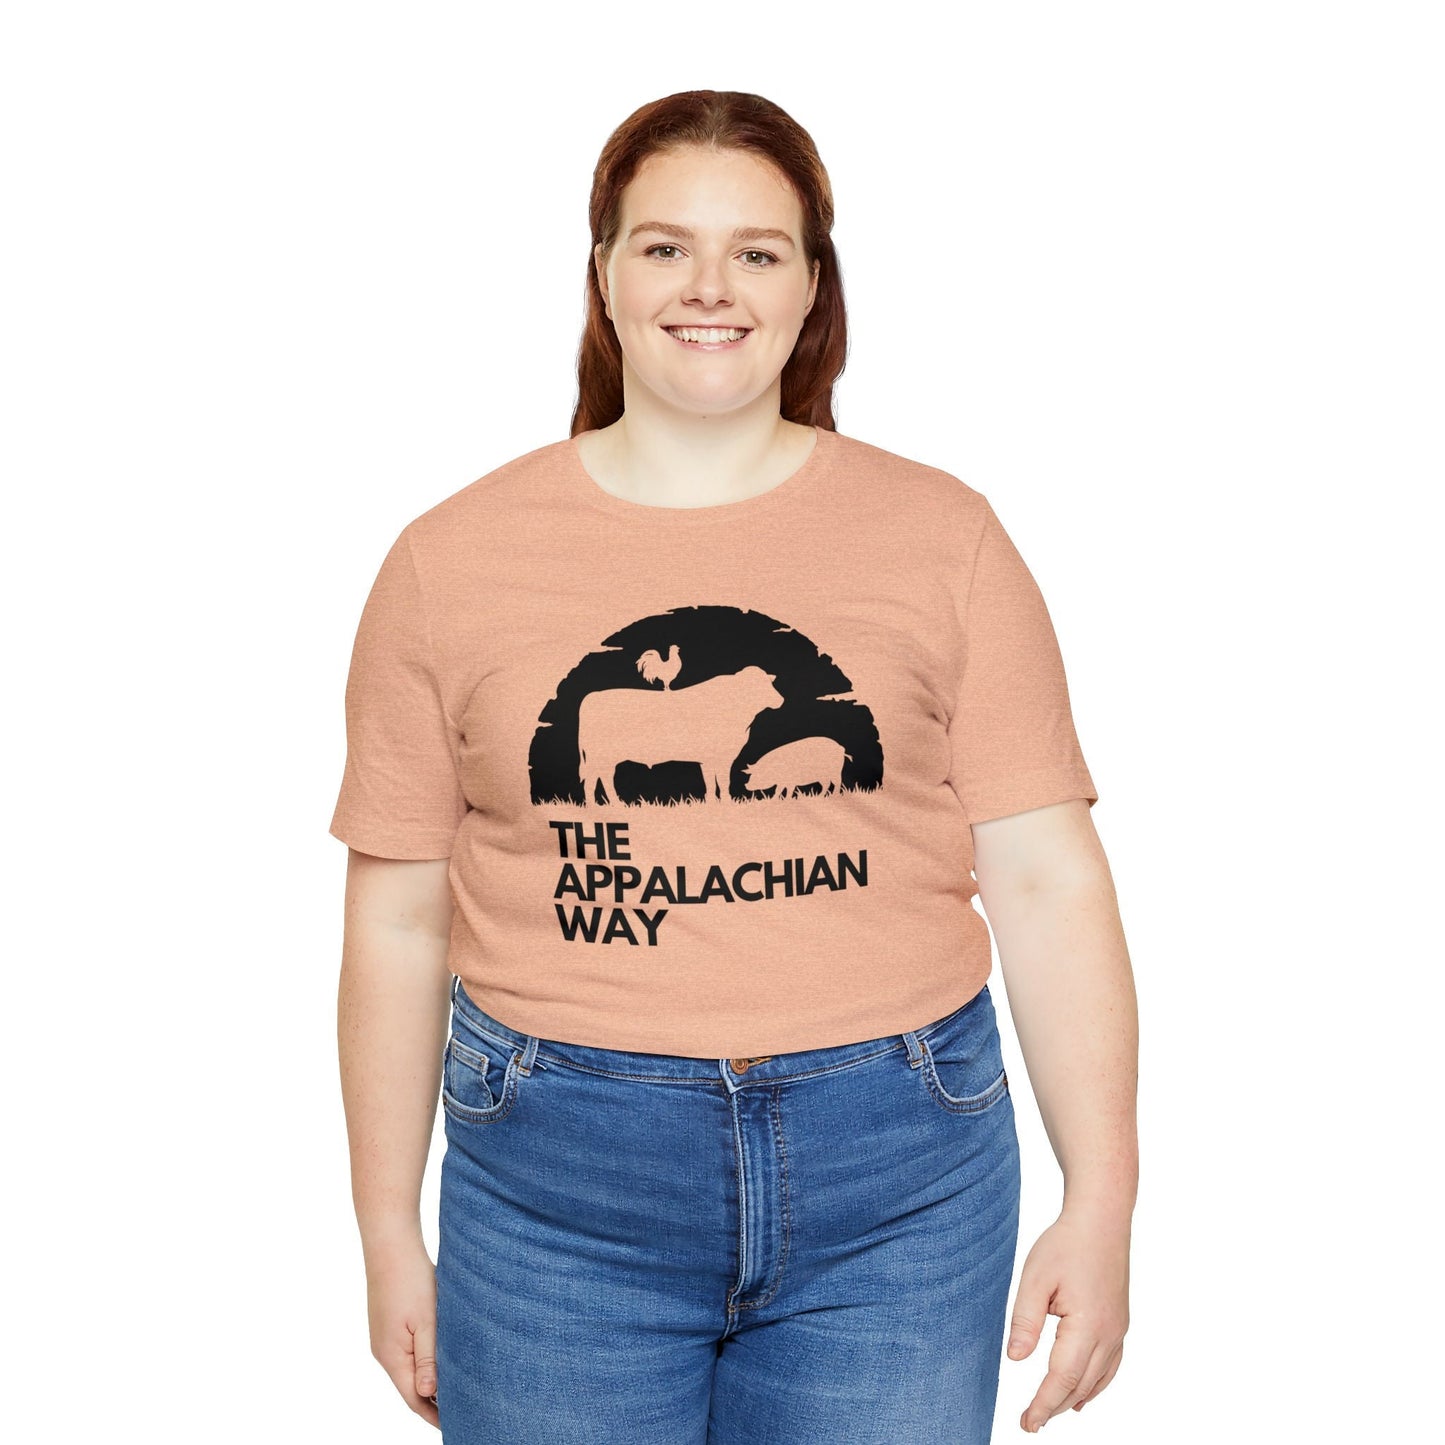 The Appalachian Way Farm Animals Graphic T-shirt